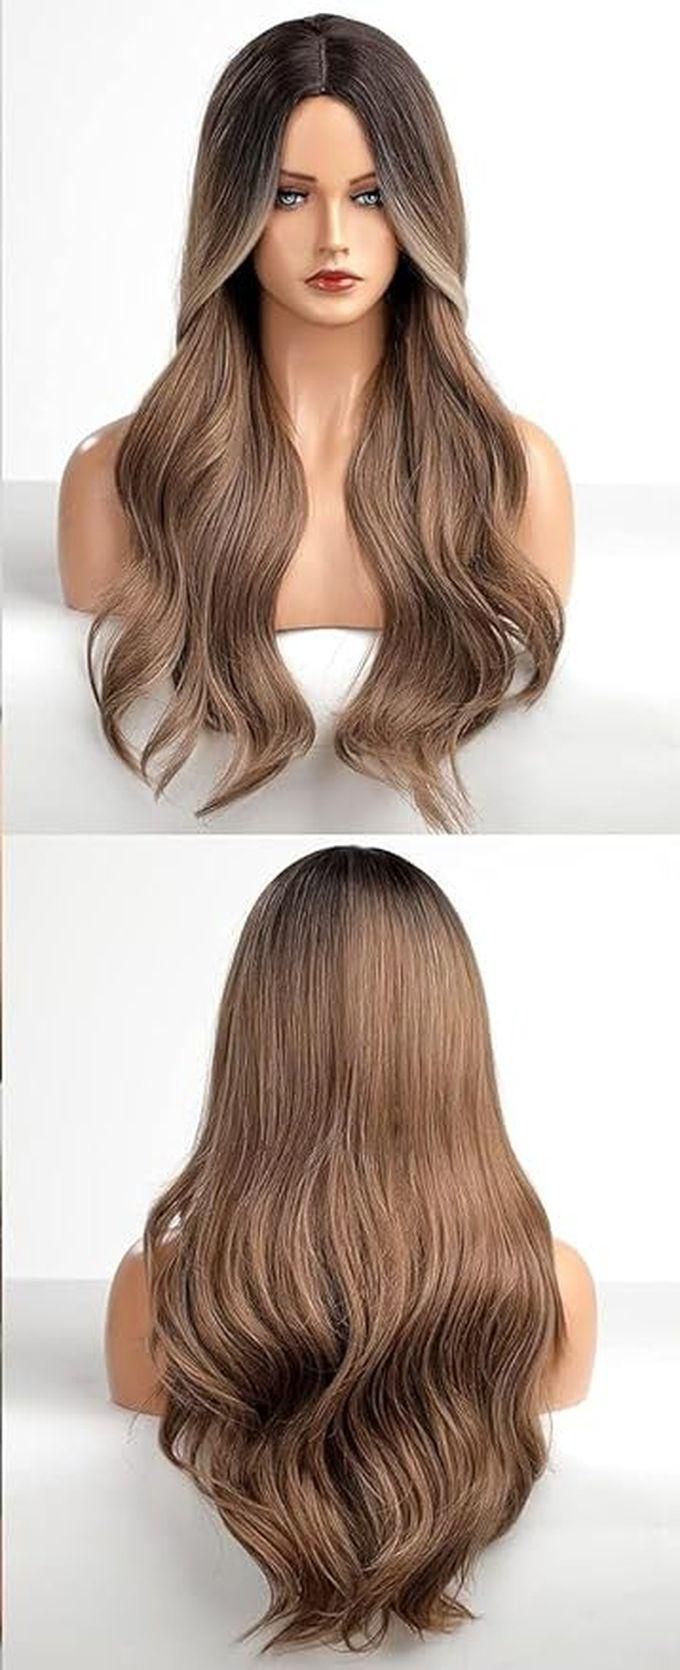 Long Curly Brown Synthetic Hair Wig For Women - Medium Hair Dye Heat Resistant Wig